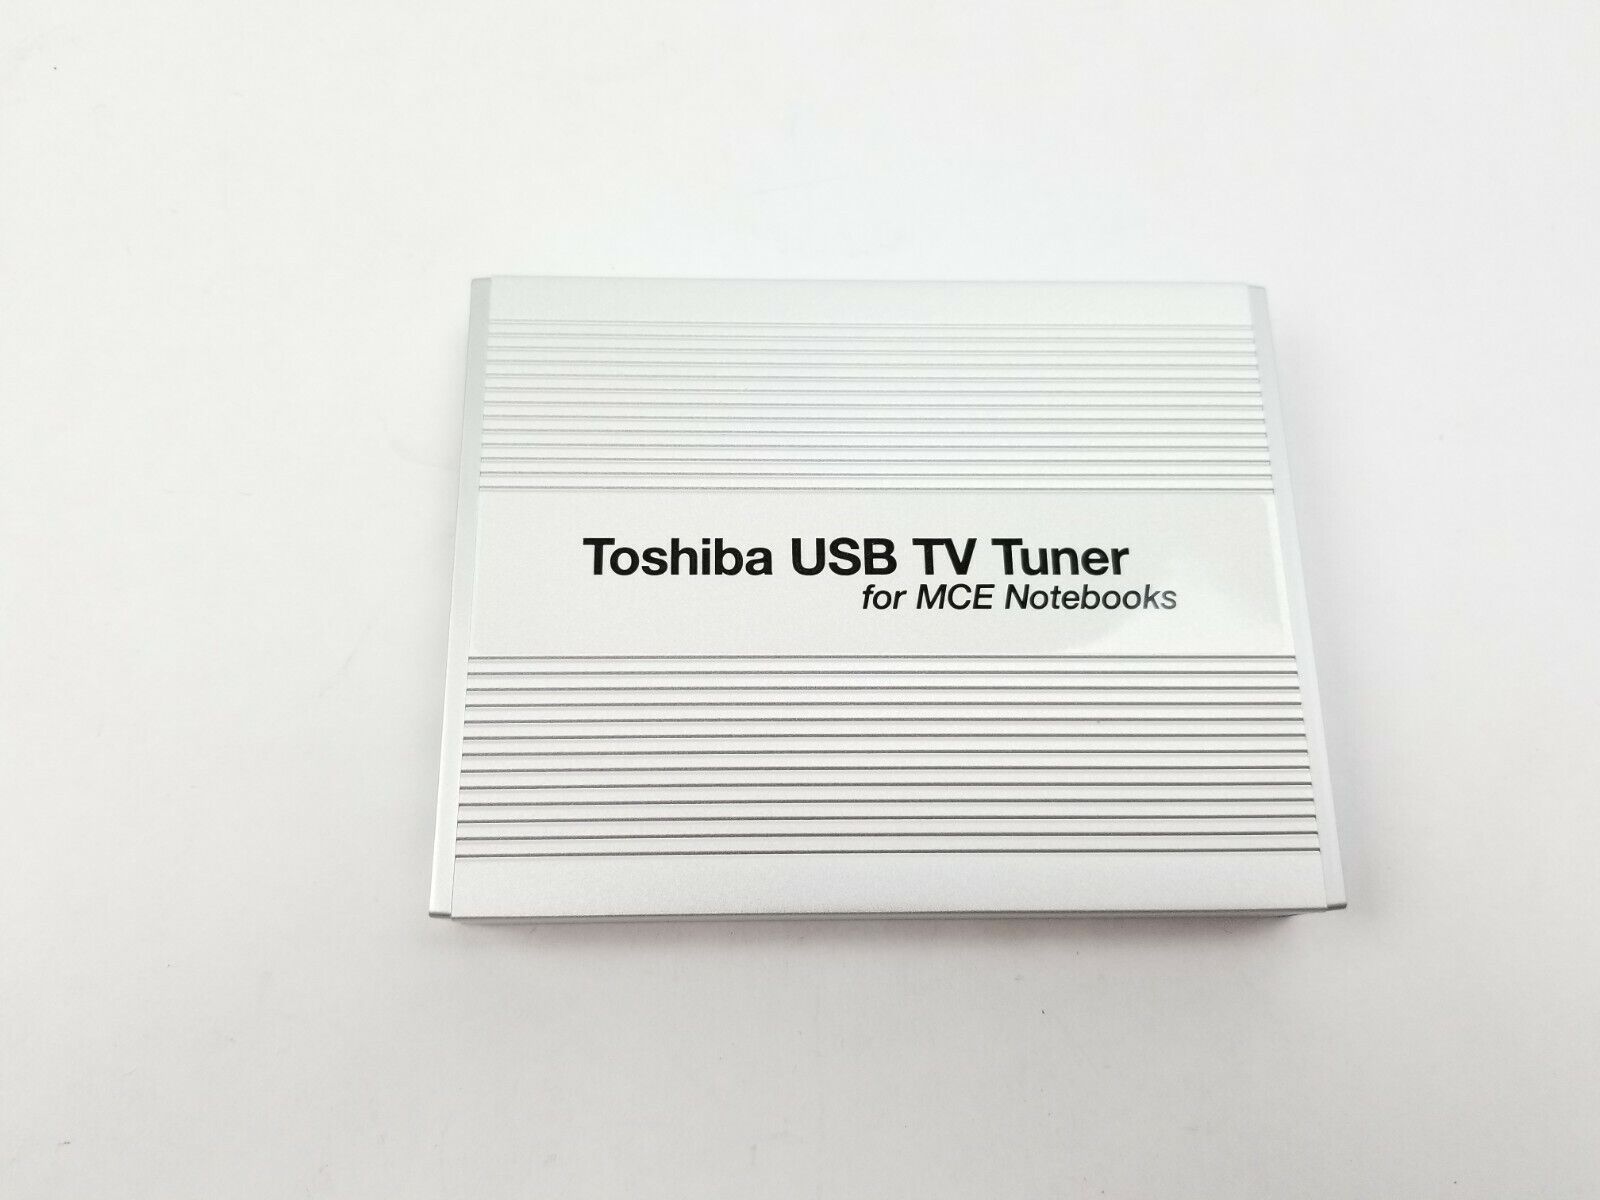 Toshiba NTSC TV Tuner for MCE Notebook Media Center USB  2.0